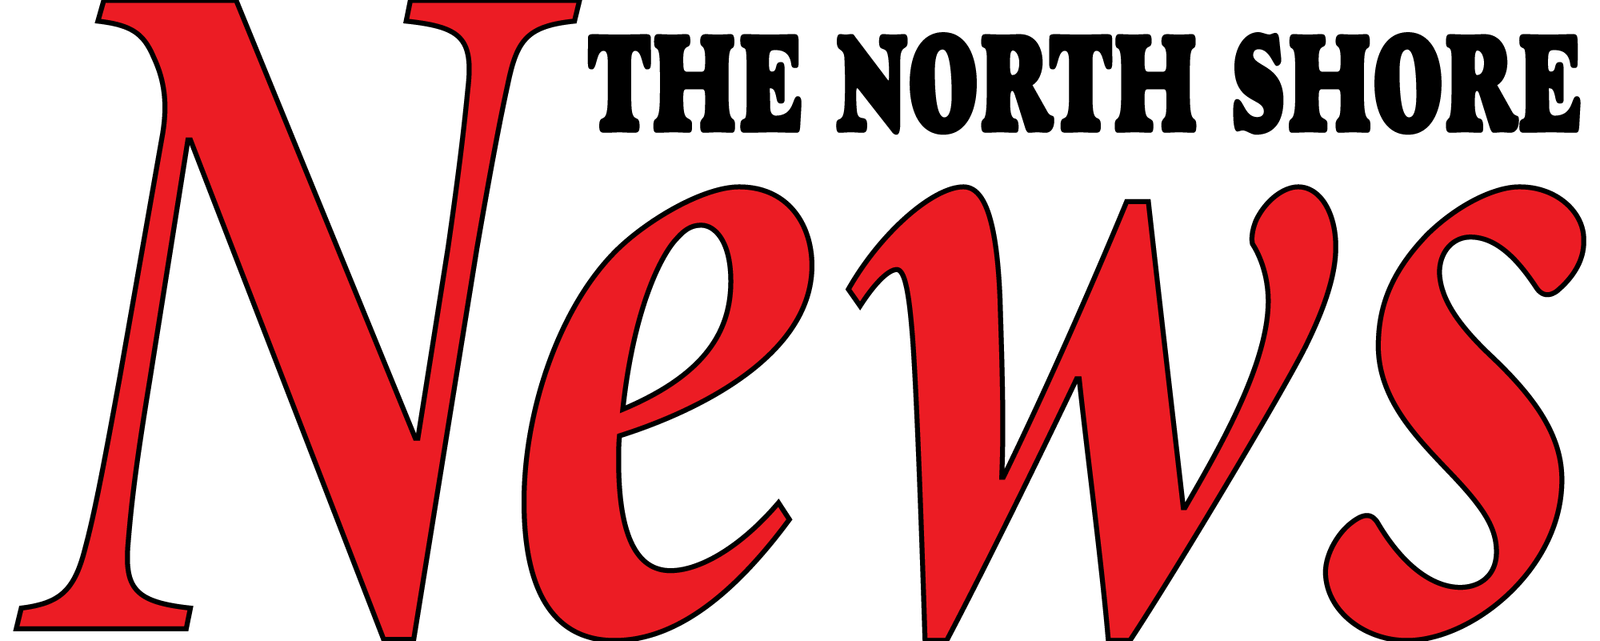 The North Shore News